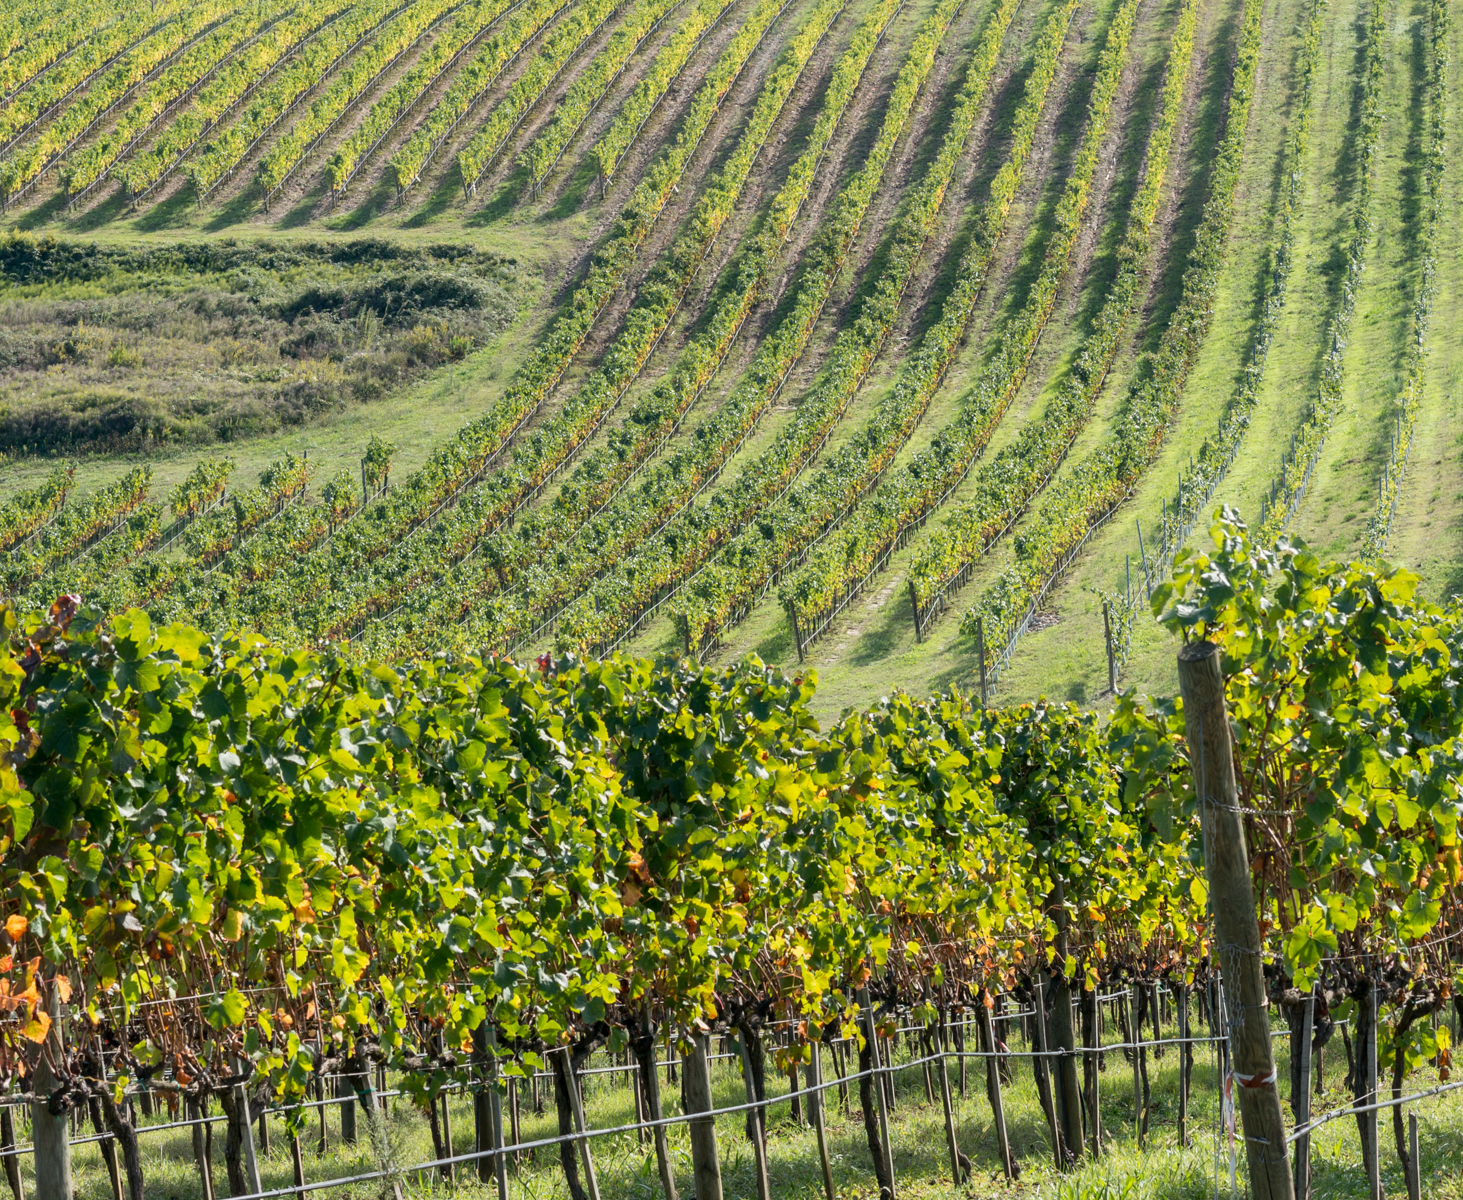 Vineyard in Tuscana along the Via Francigena as it approaches Gambassi Terme, Italia | Photo by Mike Hudak